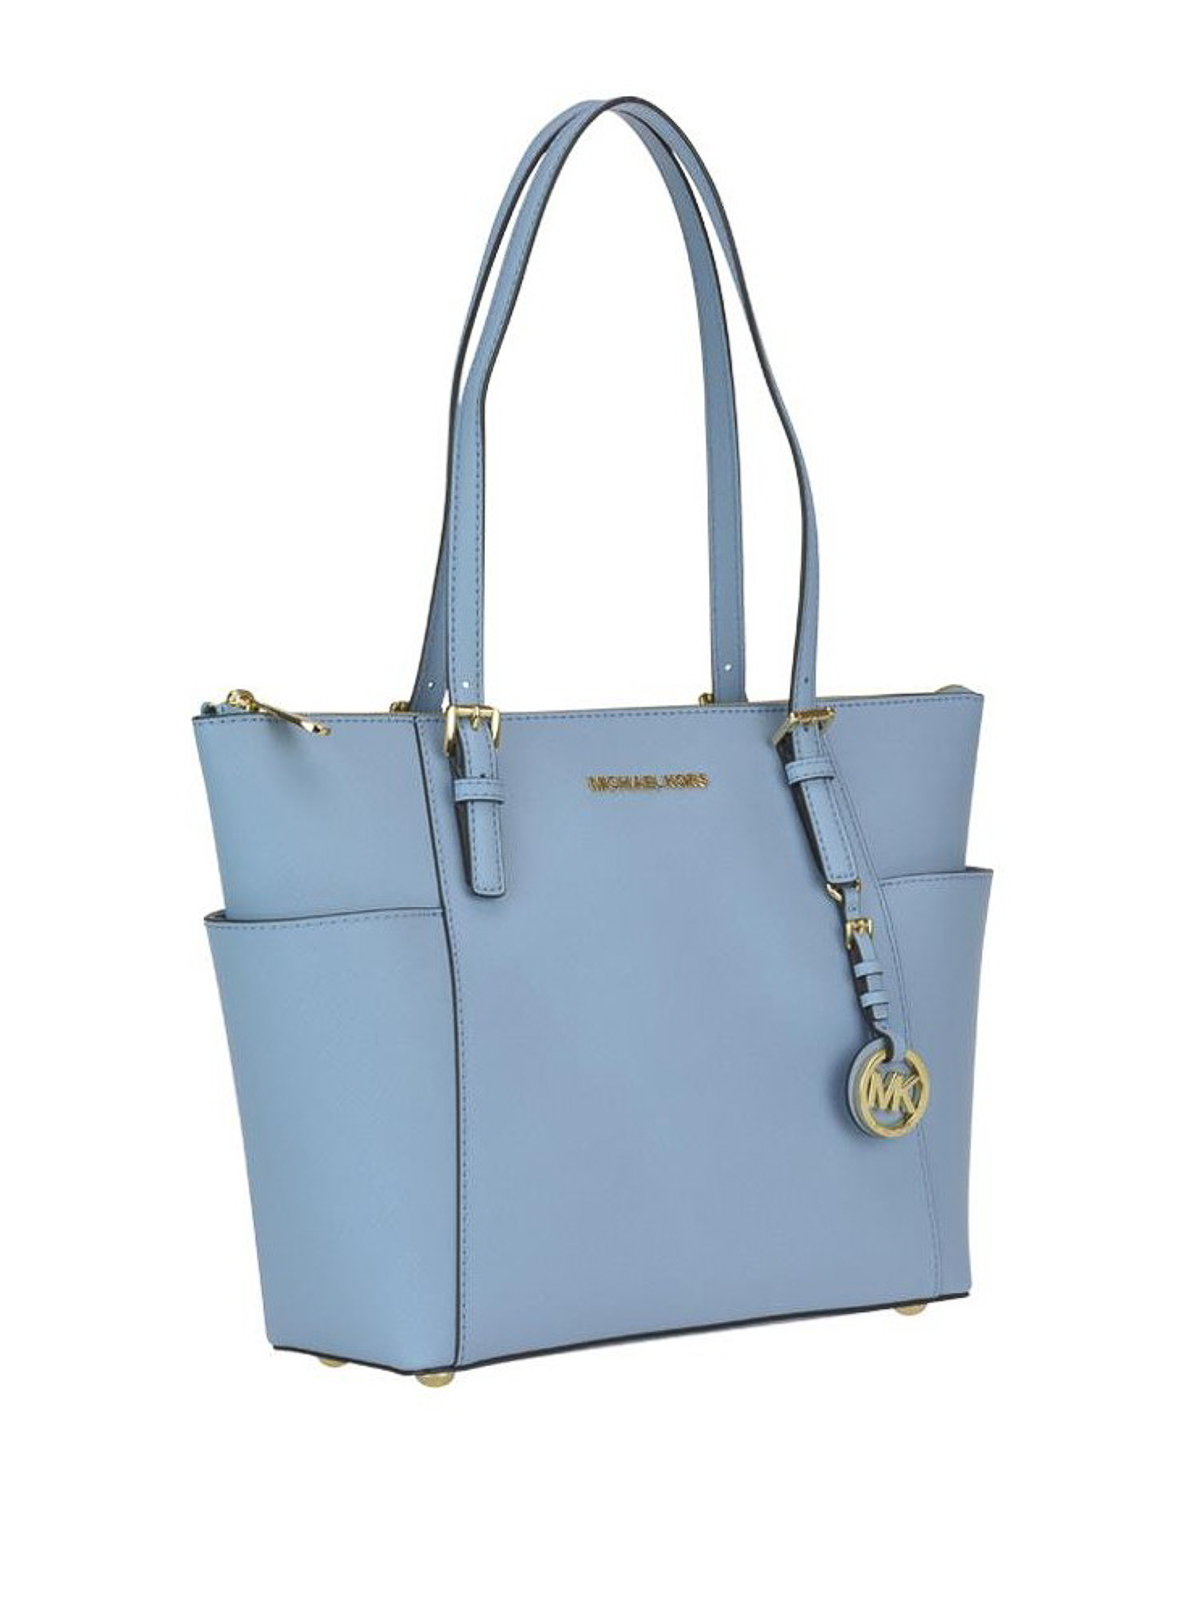 blue and white mk purse